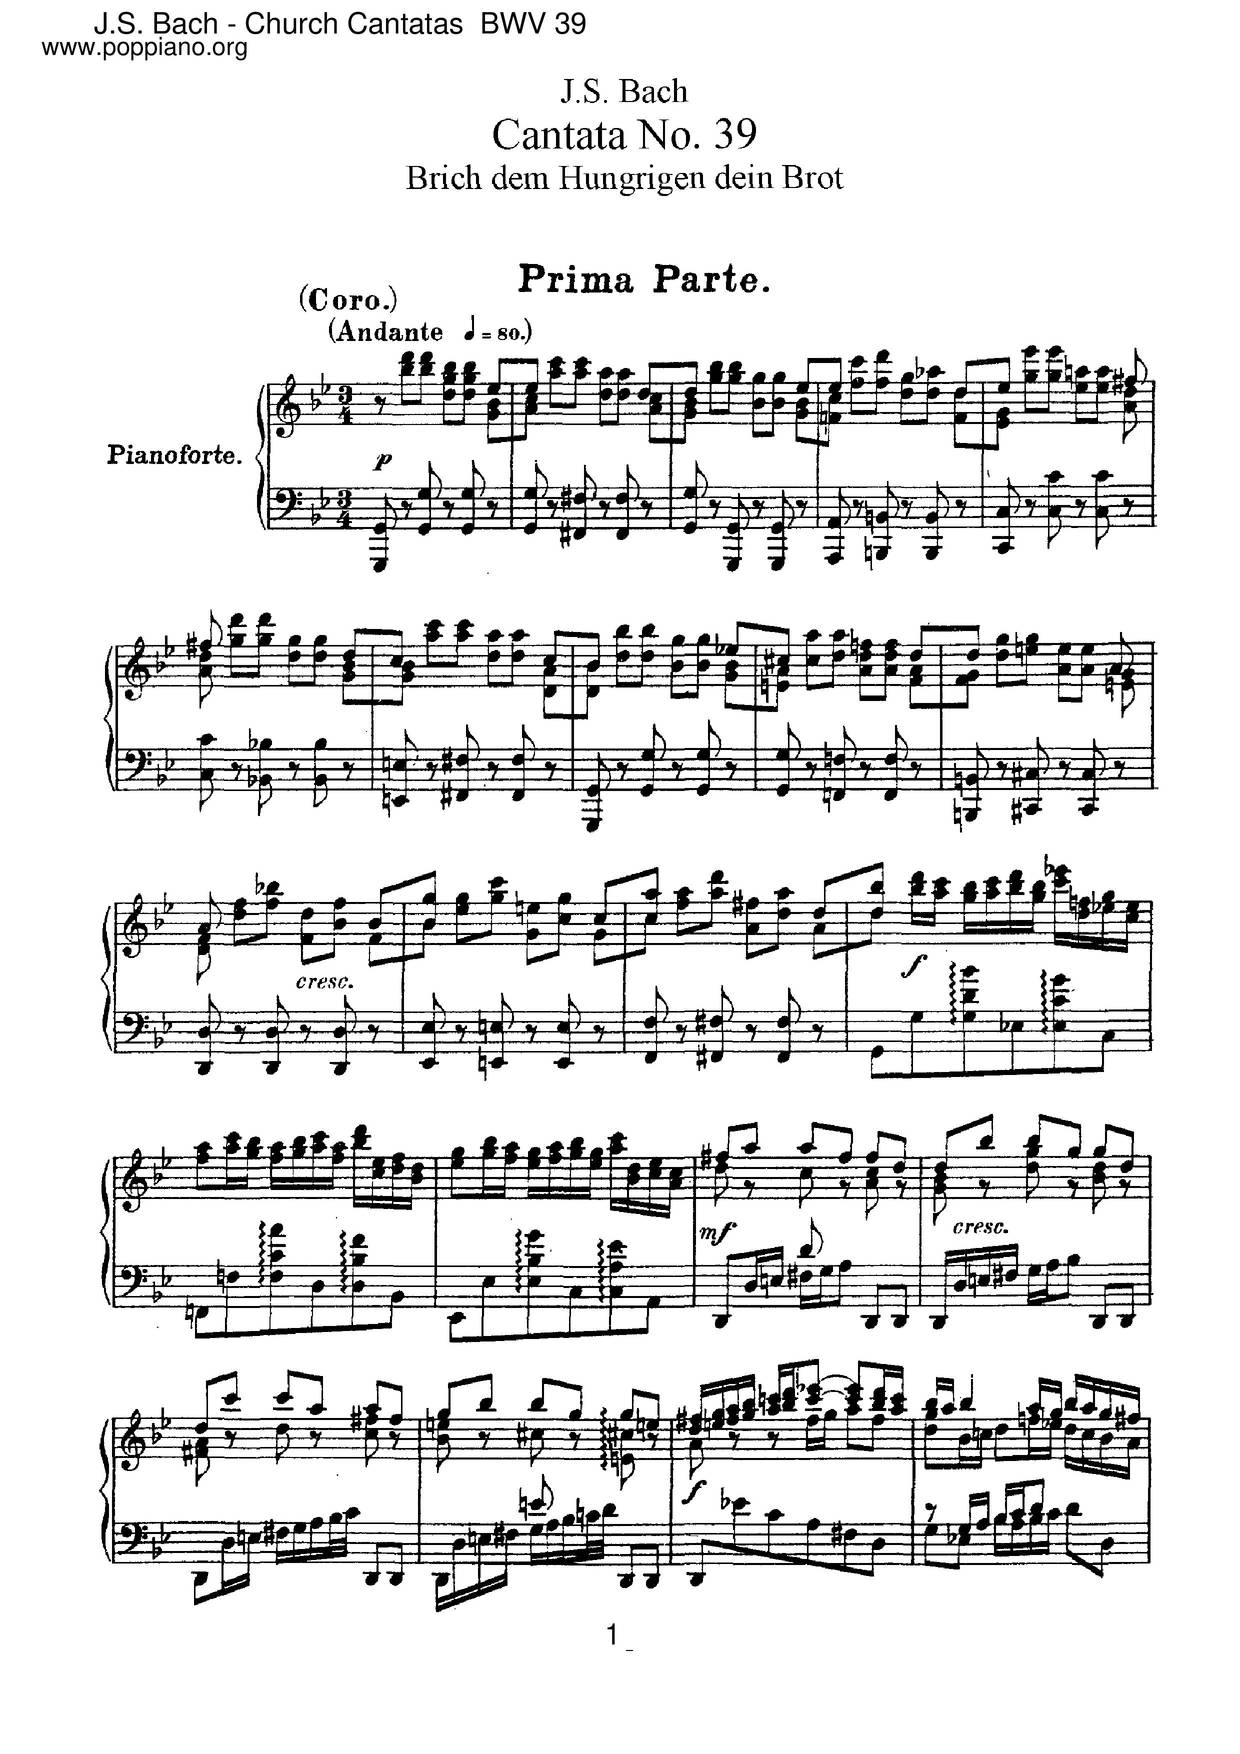 Brich Dem Hungrigen Dein Brot, BWV 39ピアノ譜